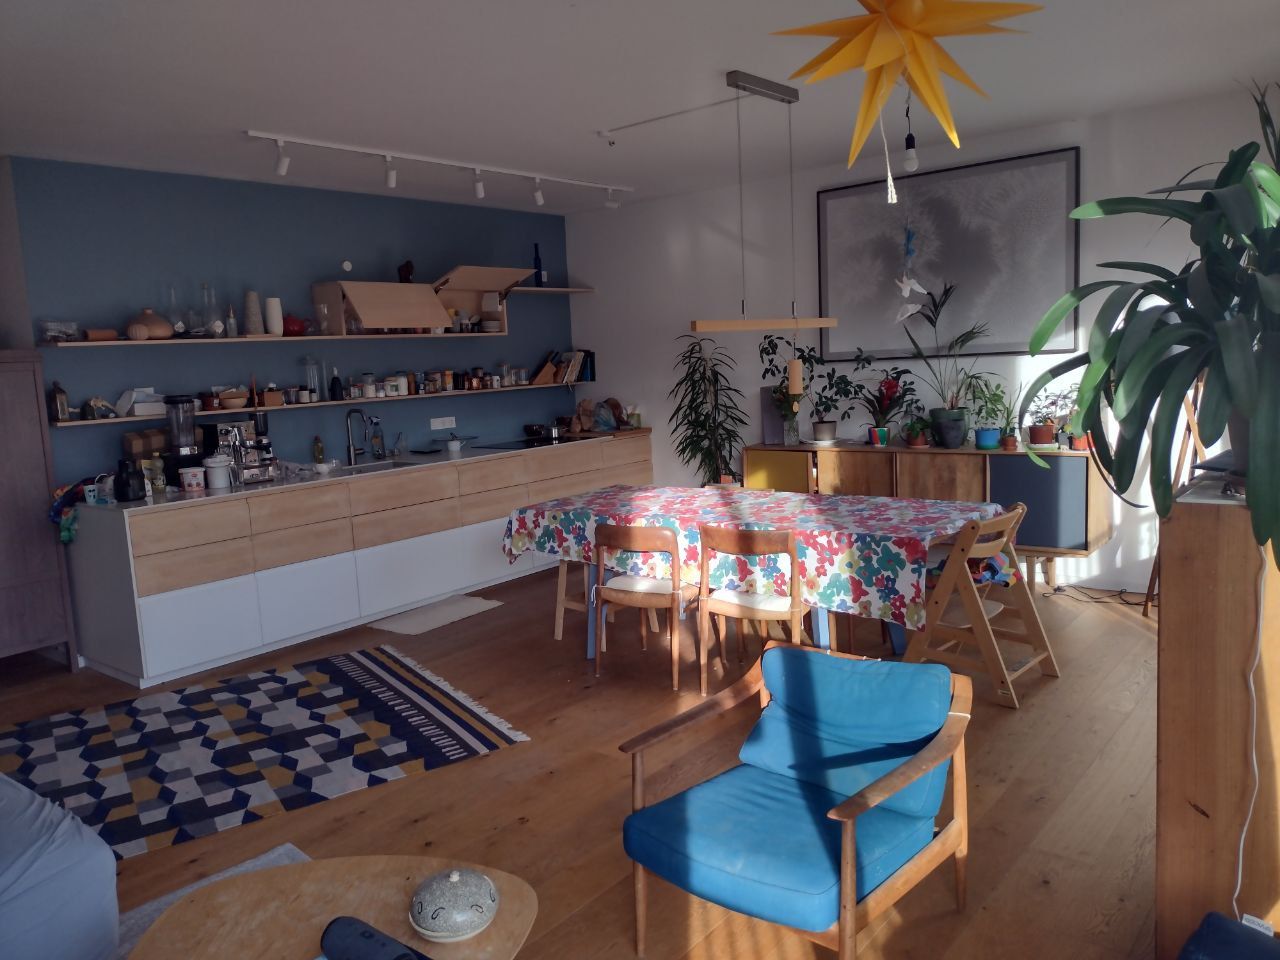 125 sqm apartment in Prenzlauer Berg- 1month rental in August